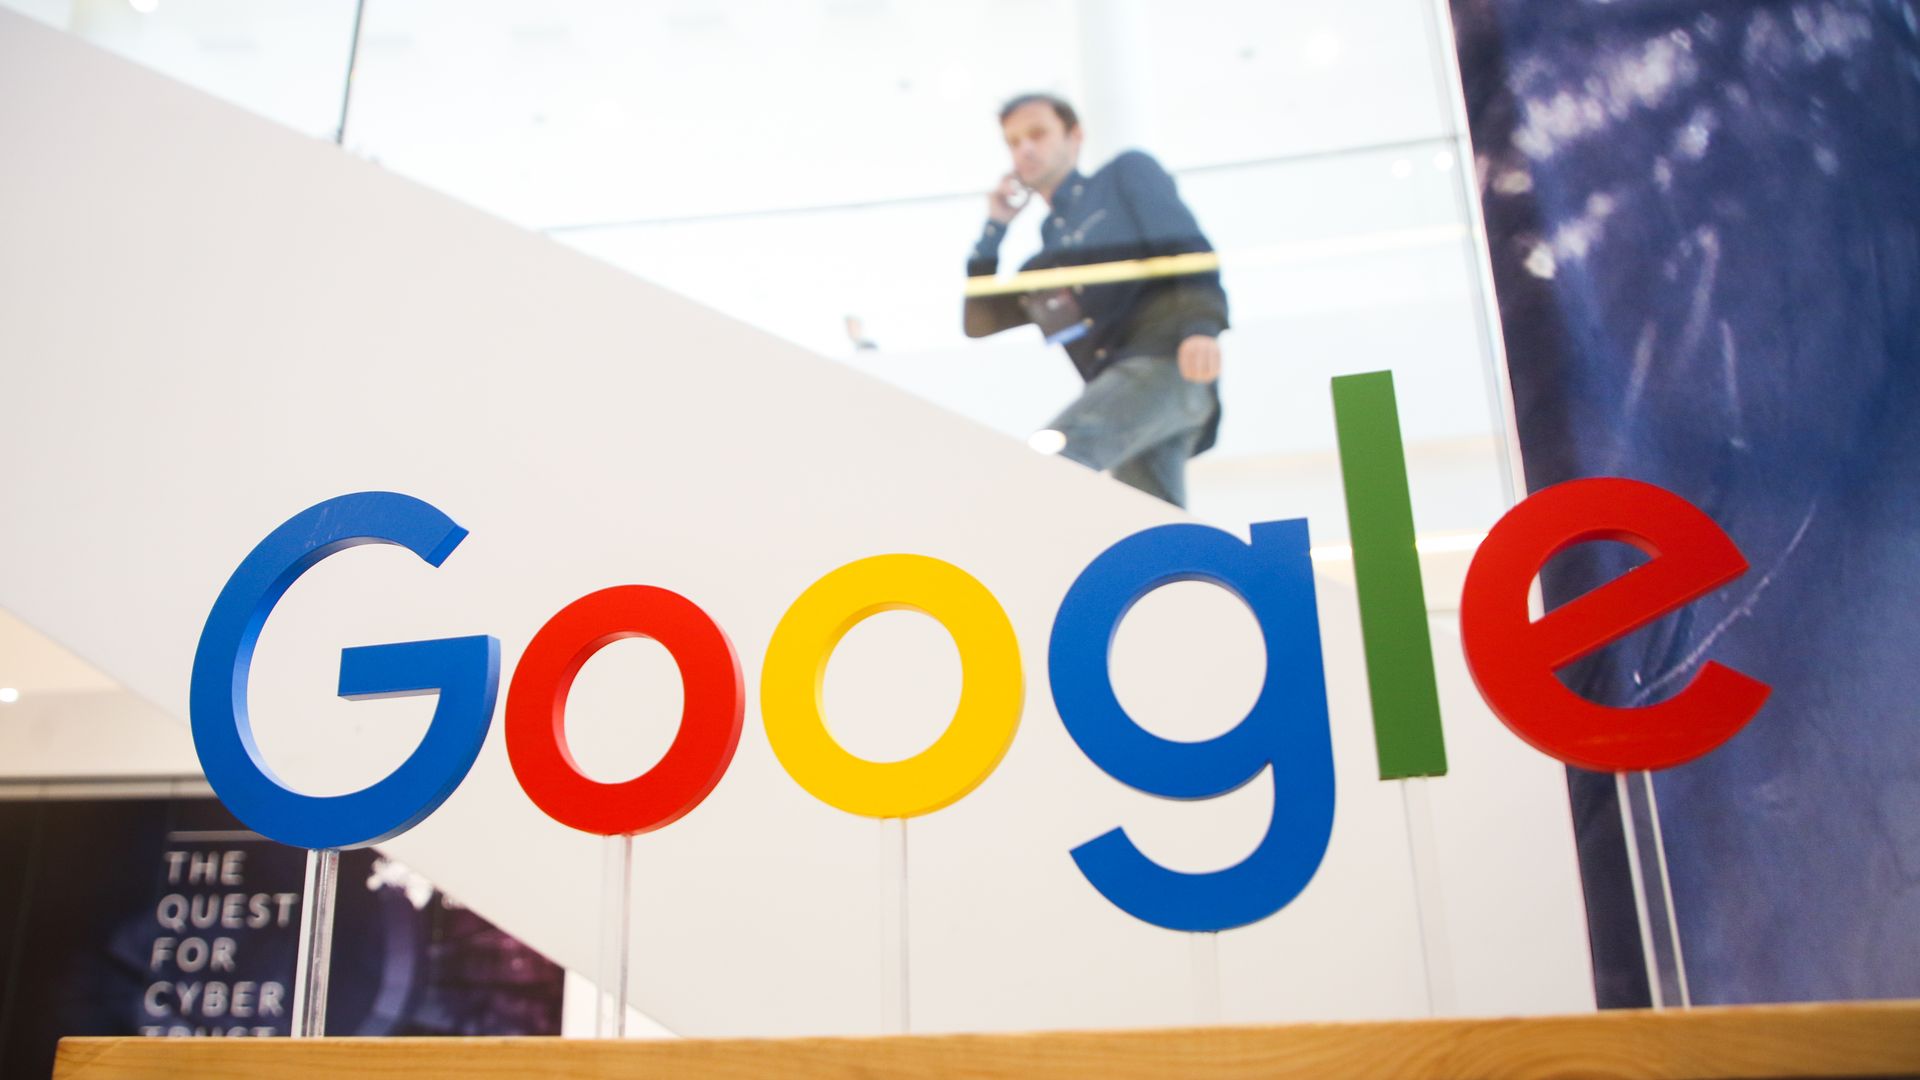 Google's logo on glass